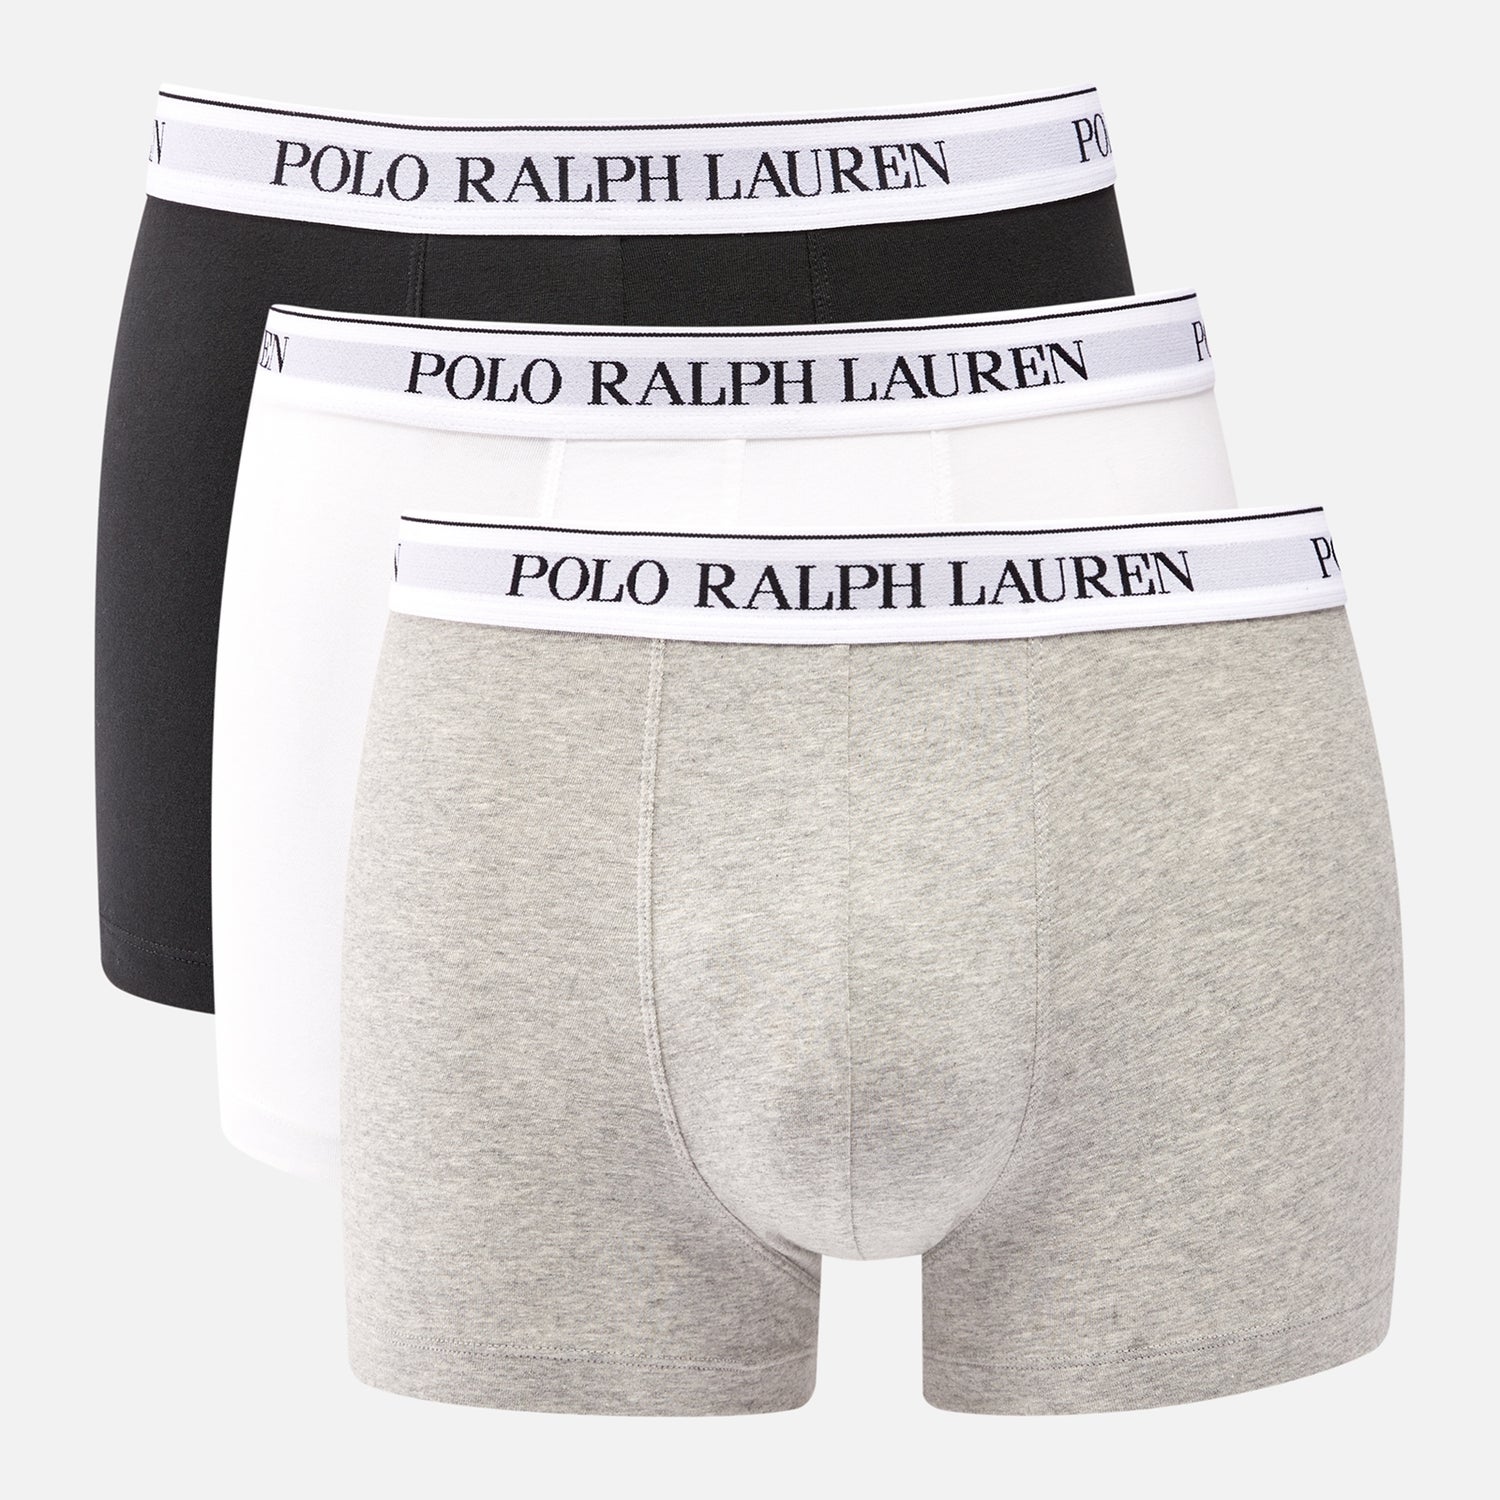 Polo Ralph Lauren 3er-Pack klassische Boxer Briefs - Andover Heather/Black/White - XL